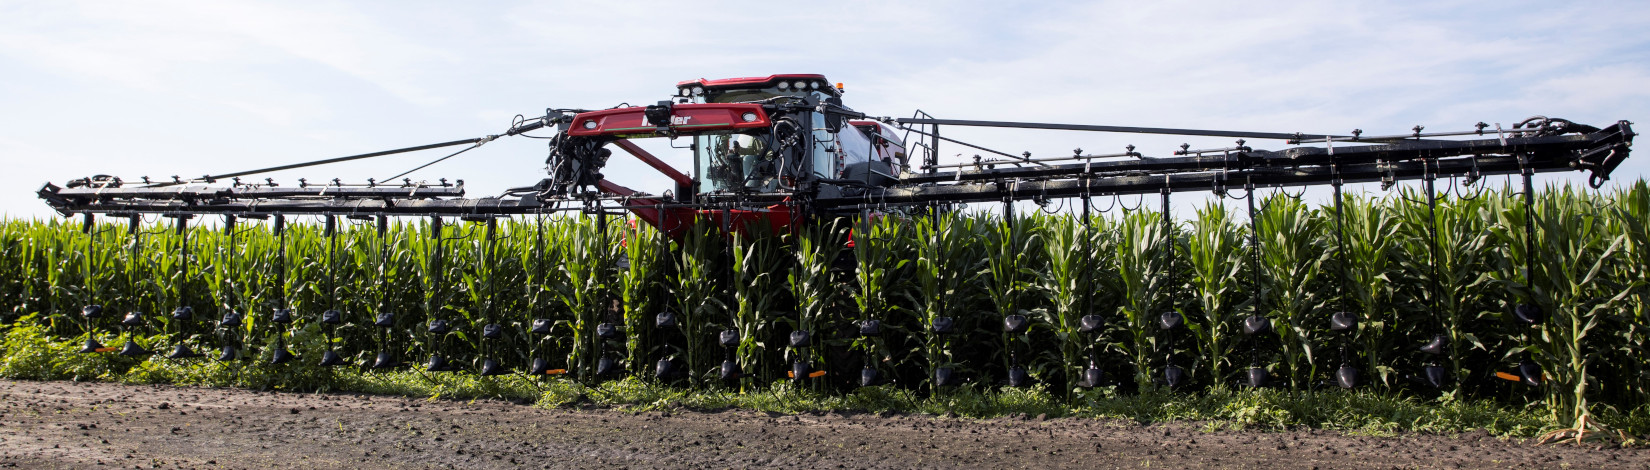 Elevated tractor applying fertilizer to a corn field. Photo taken 05-25-21